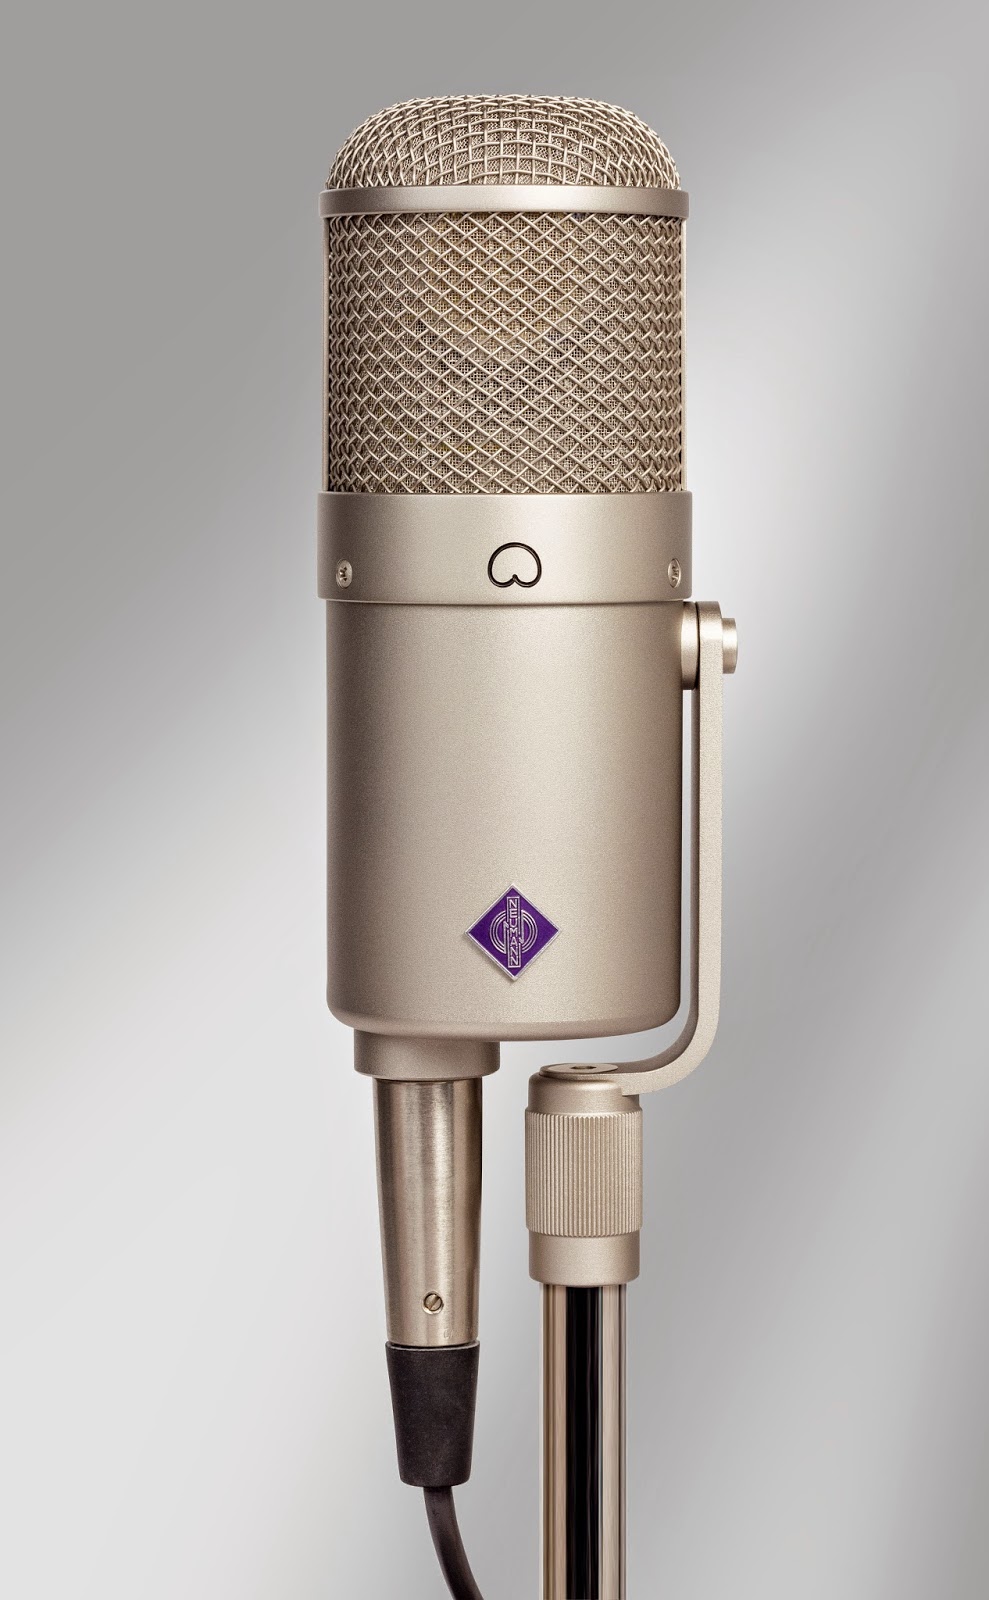 Neumann Presents U47 fet Microphone to Grammy-Award Winning Audio